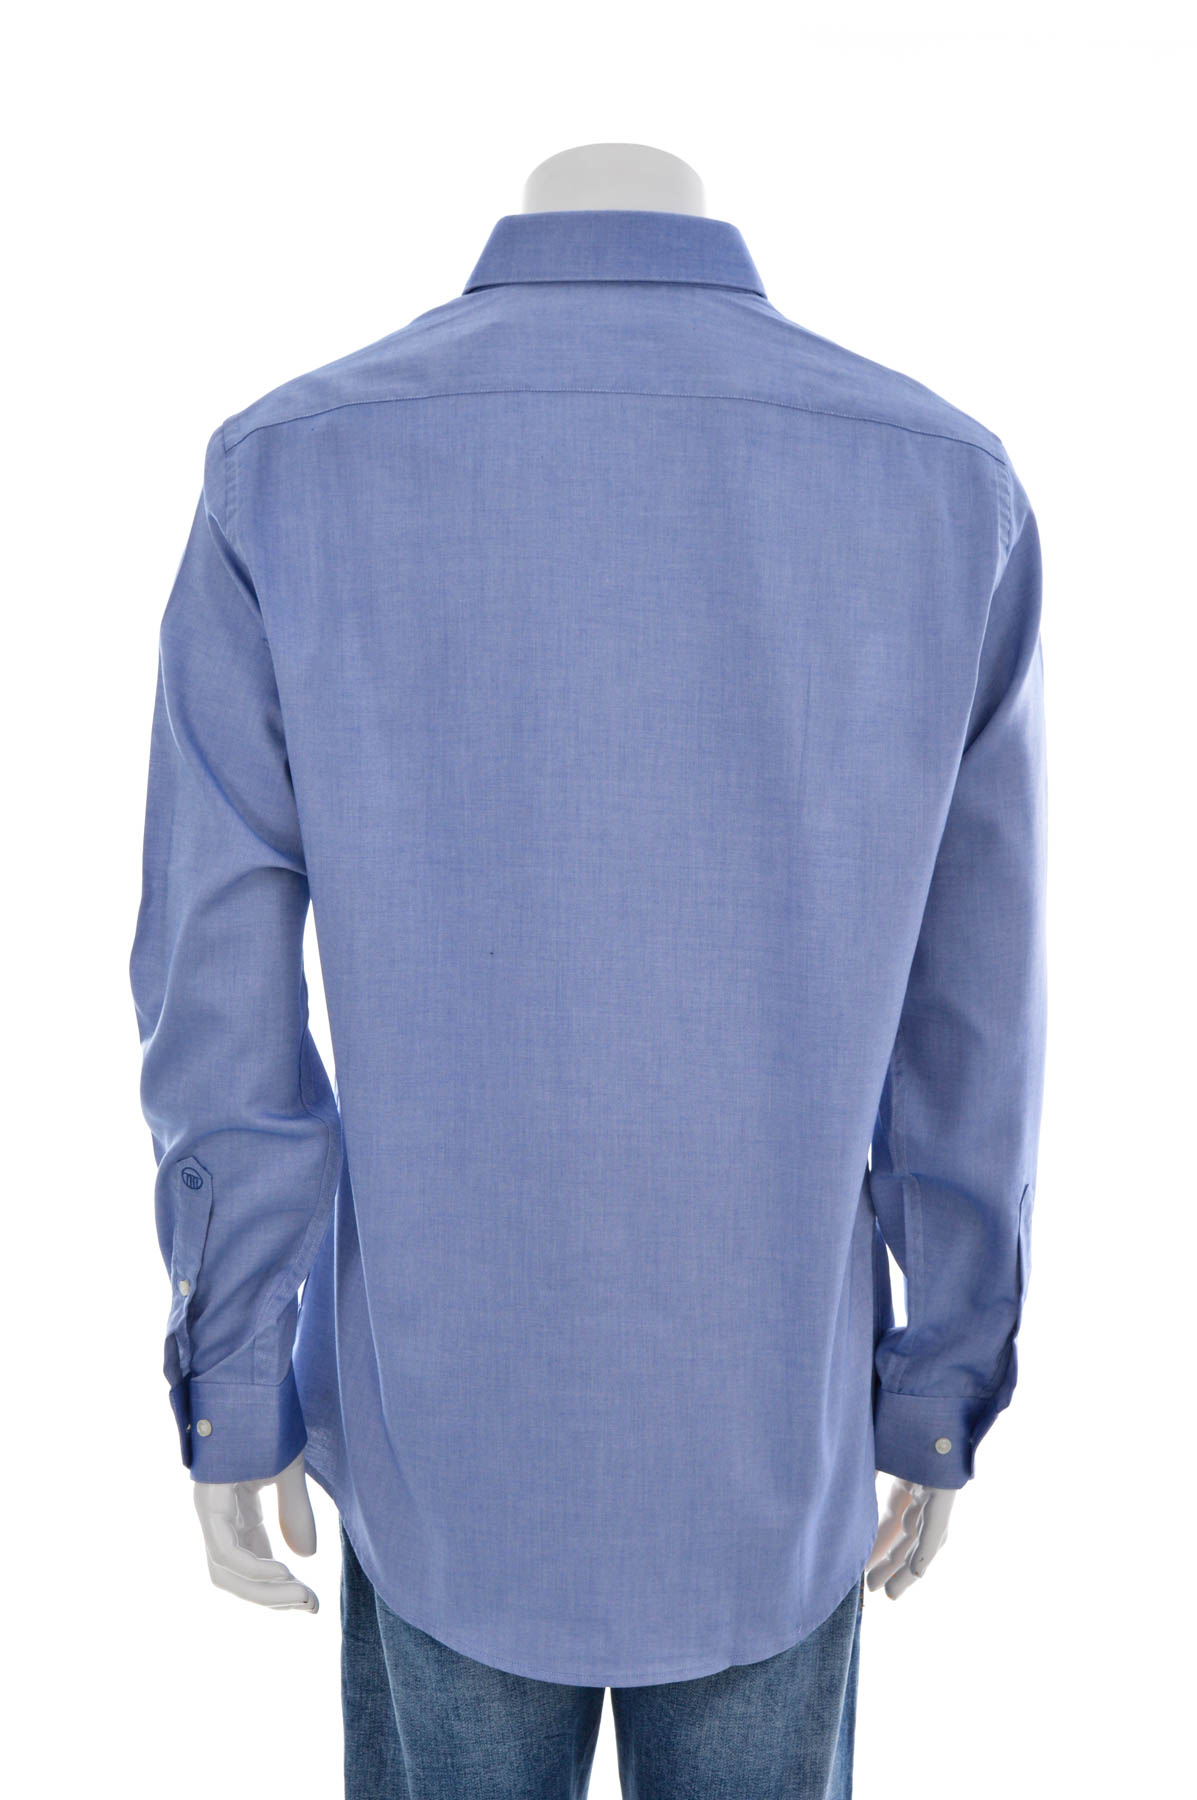 Men's shirt - KEYSTONE APPAREL - 1